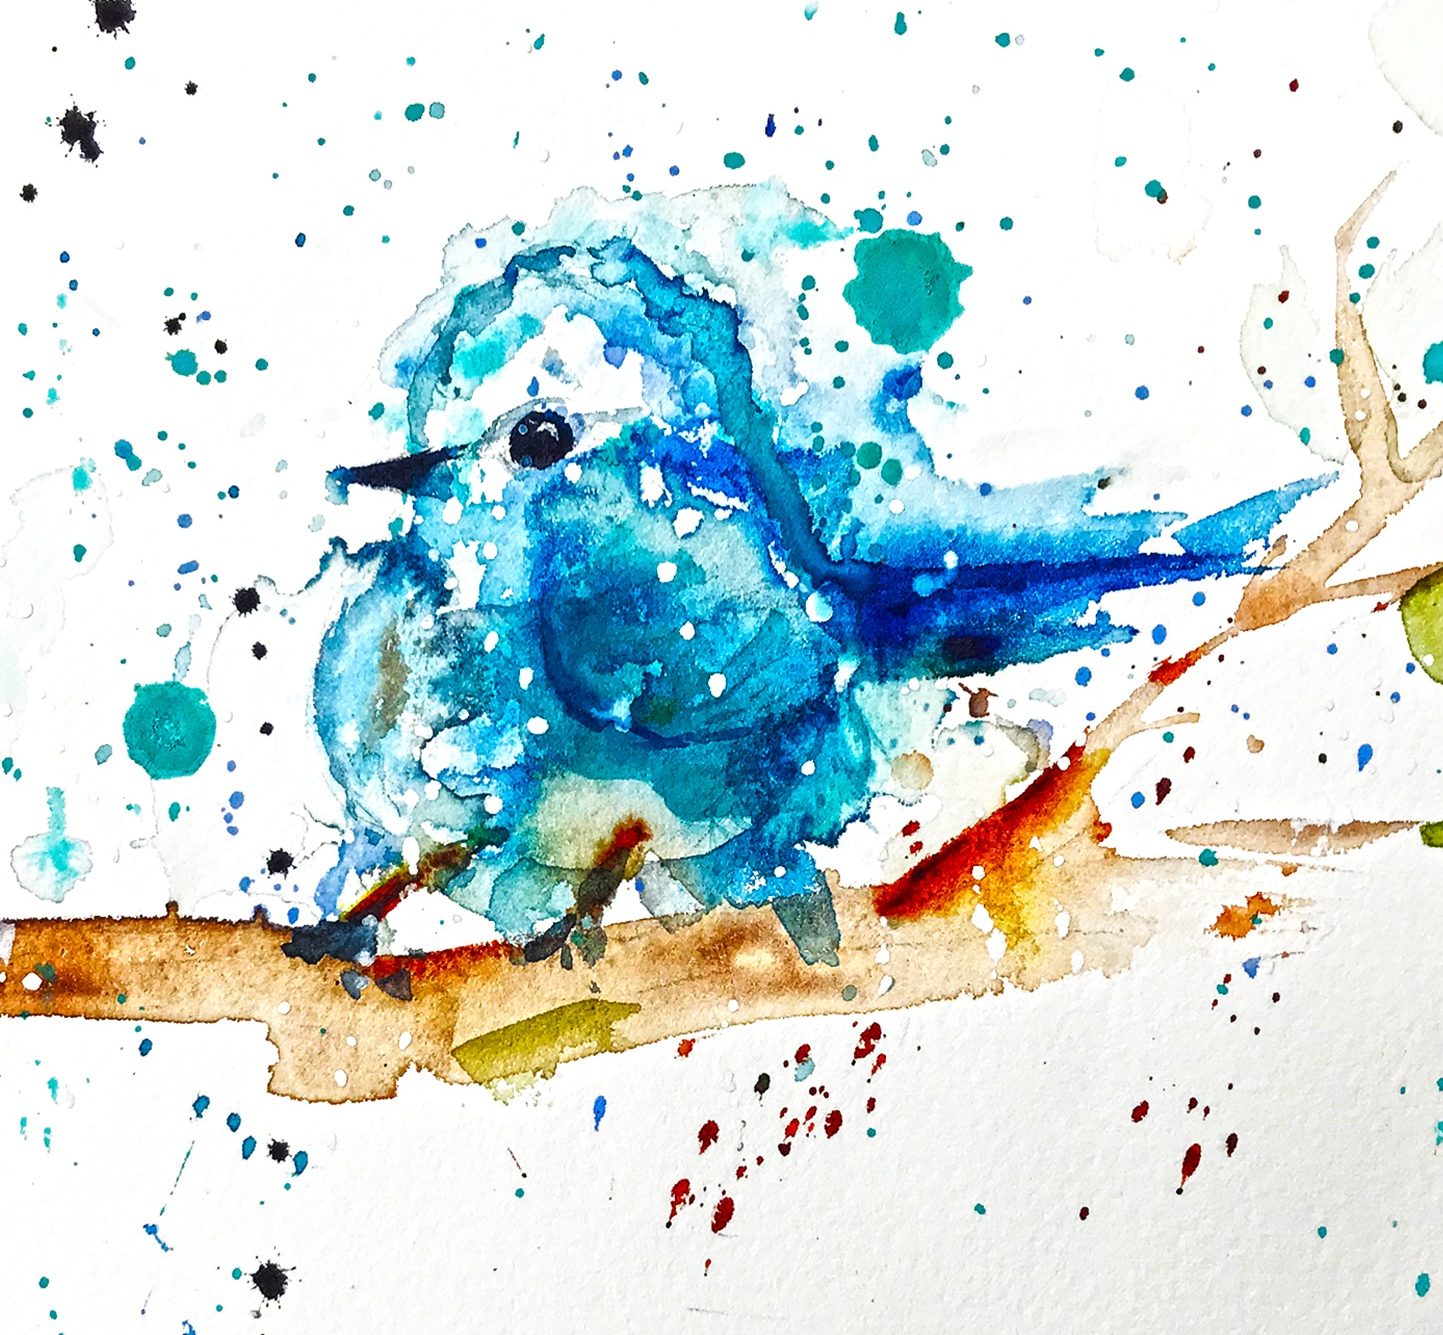 Watercolor Blue Bird